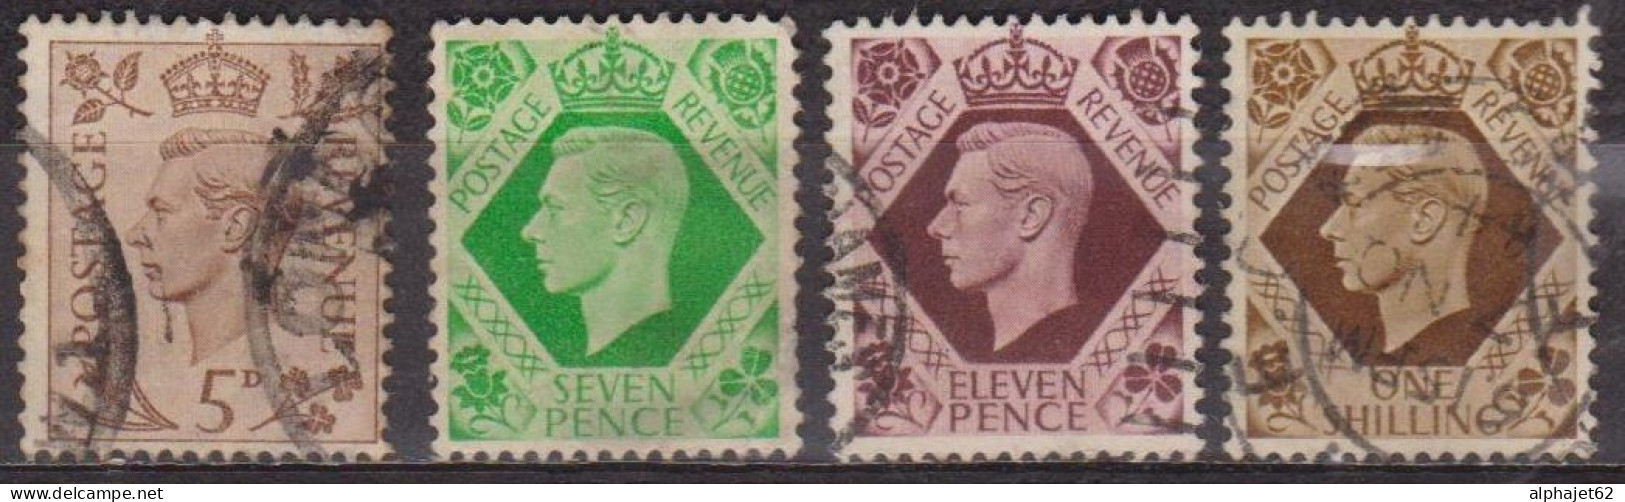 Avènement Du Roi George VI - GRANDE BRETAGNE - 1937 - N° 216-218-221A-222 - Gebraucht